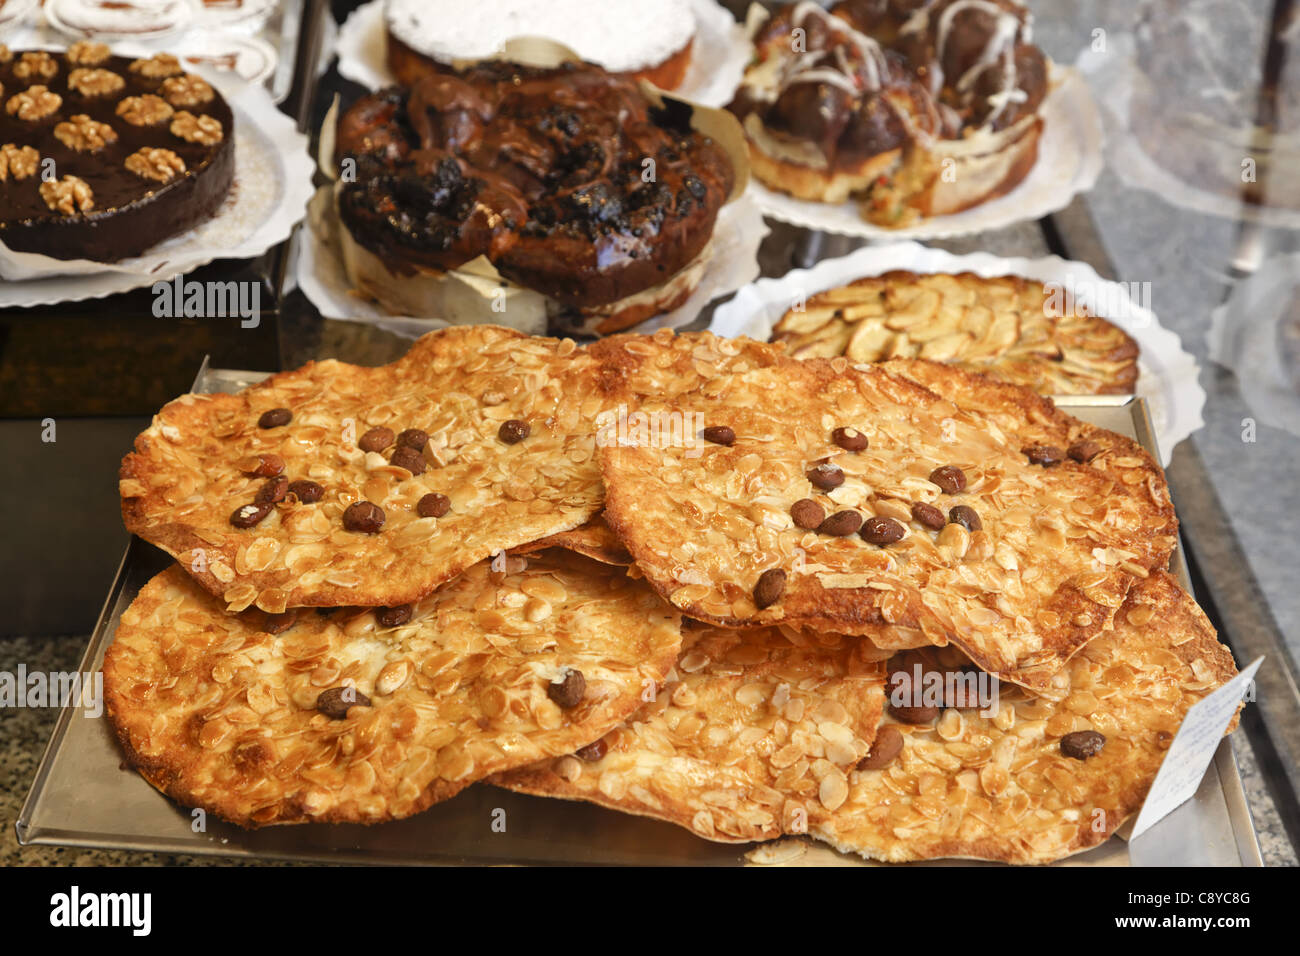 Confiserie, Almond pastries, Valencia, Spain Stock Photo